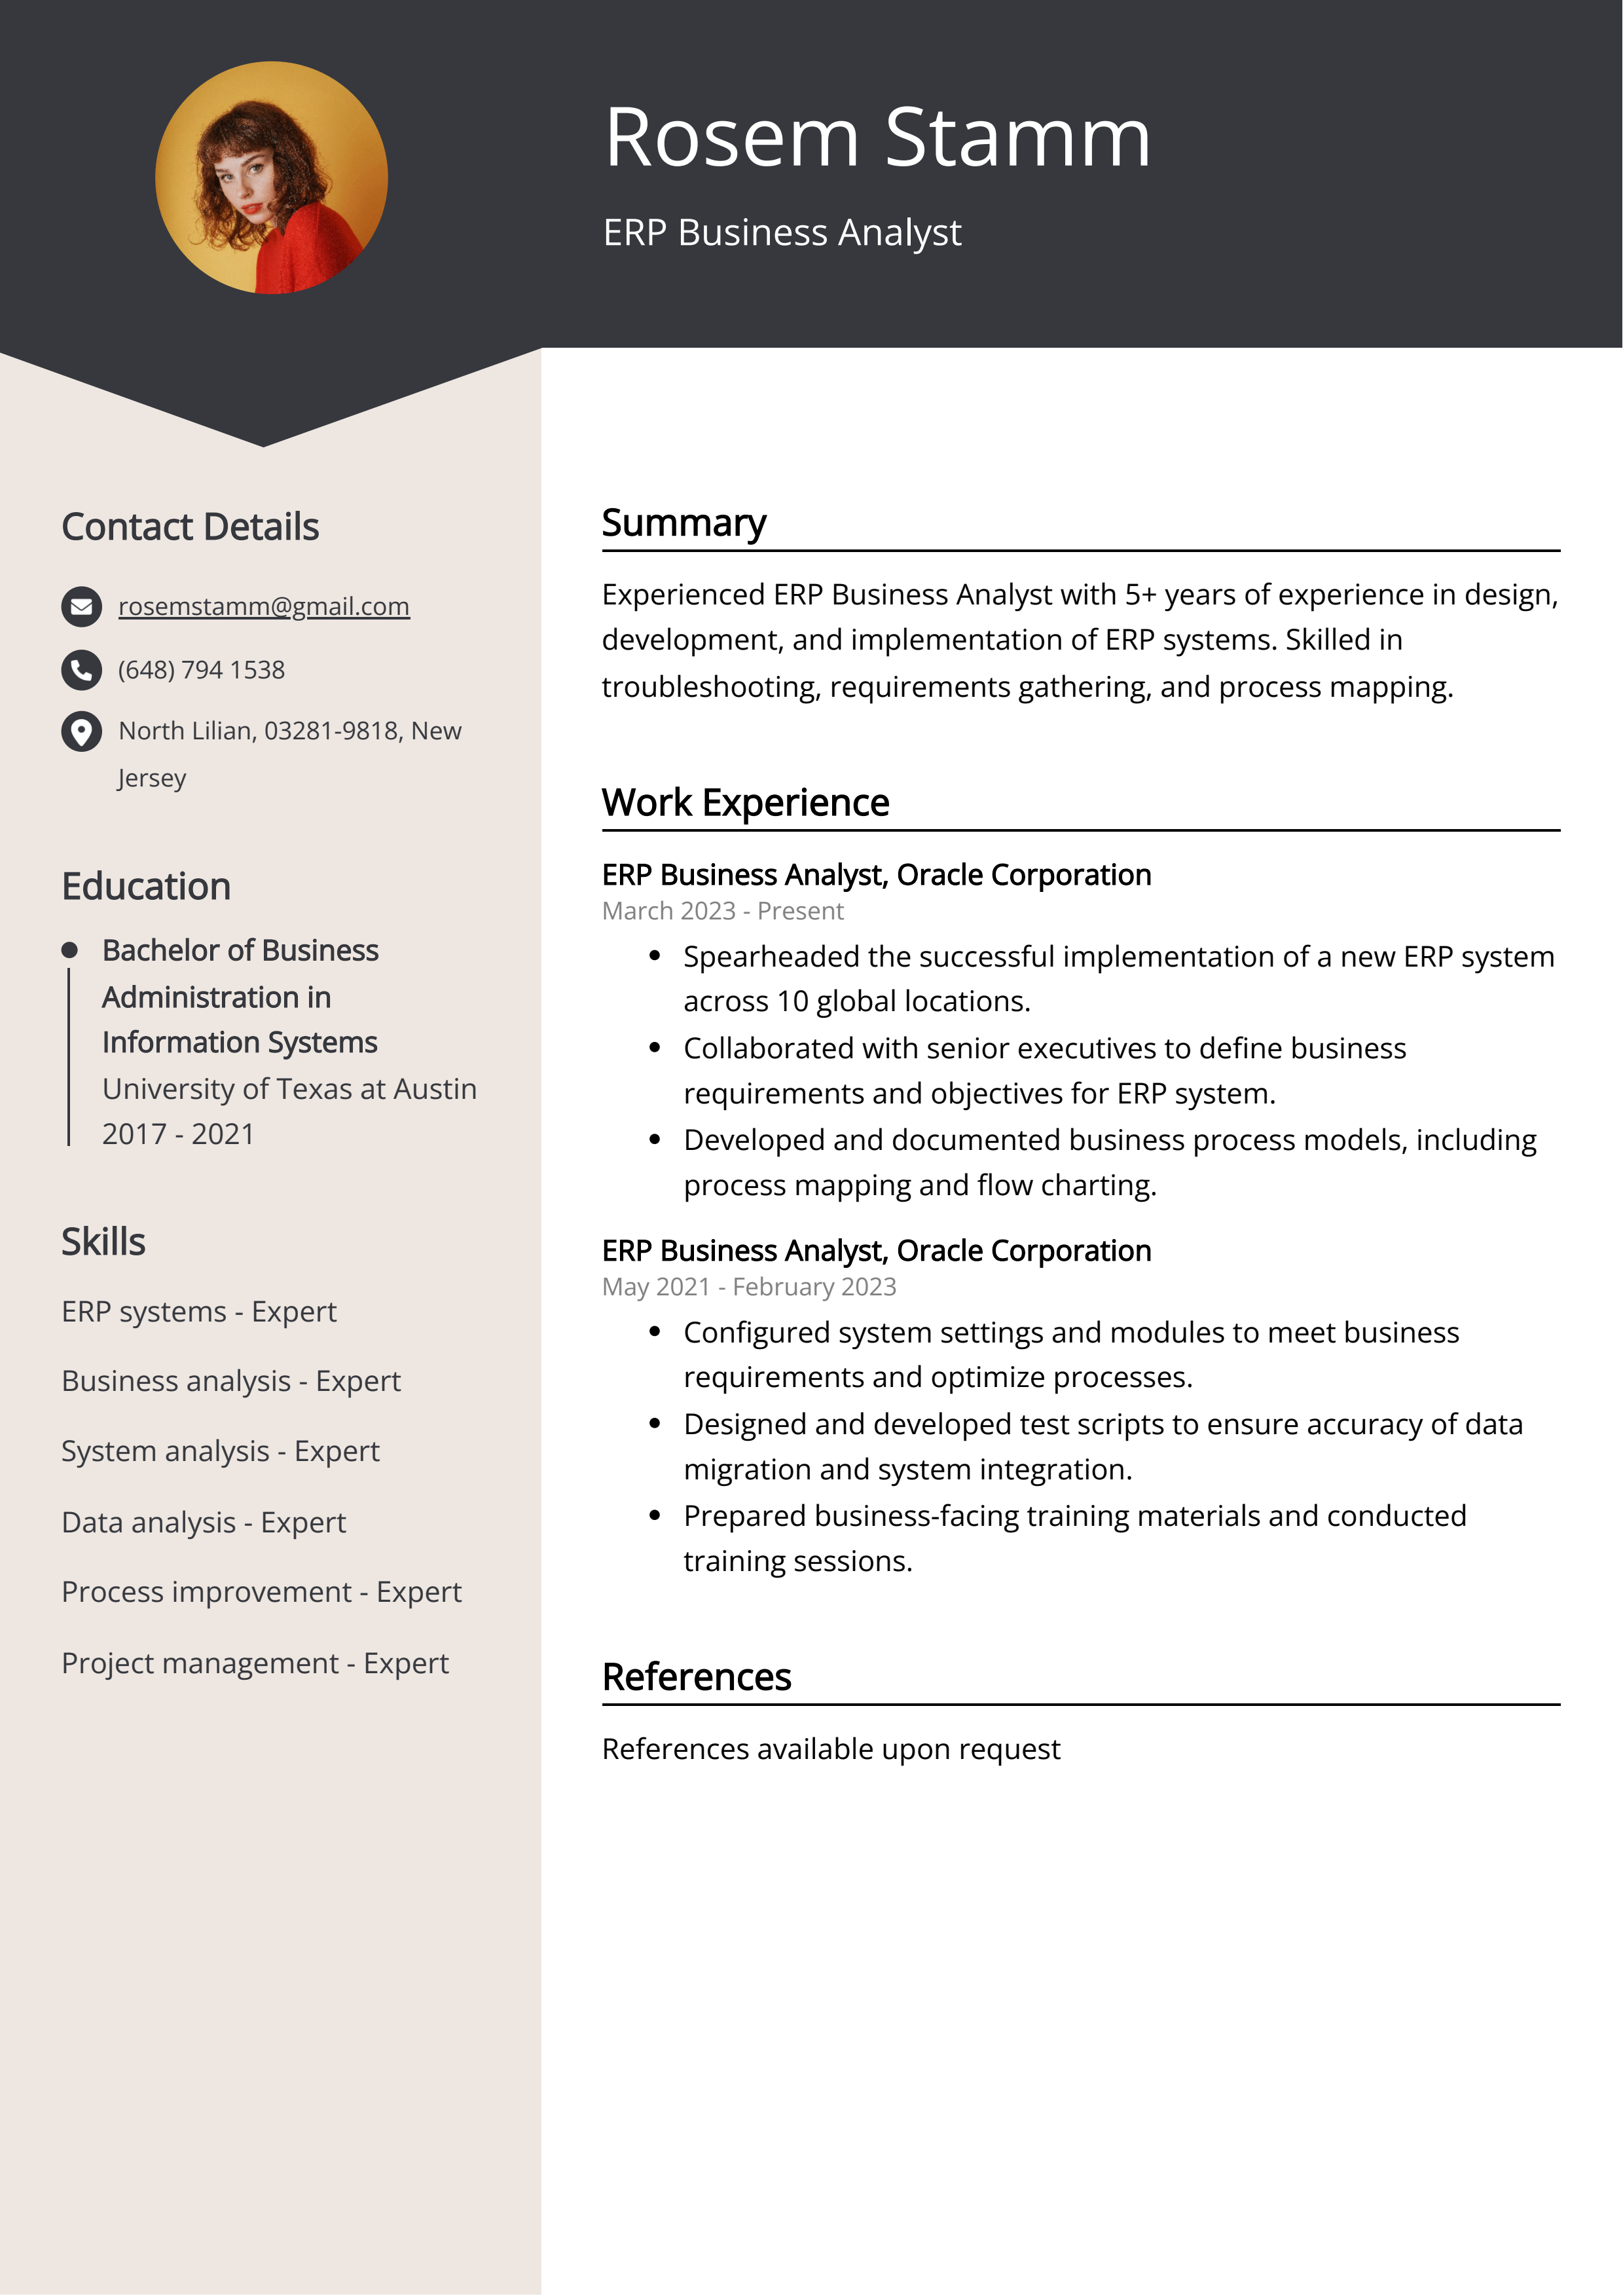 ERP Business Analyst CV Example